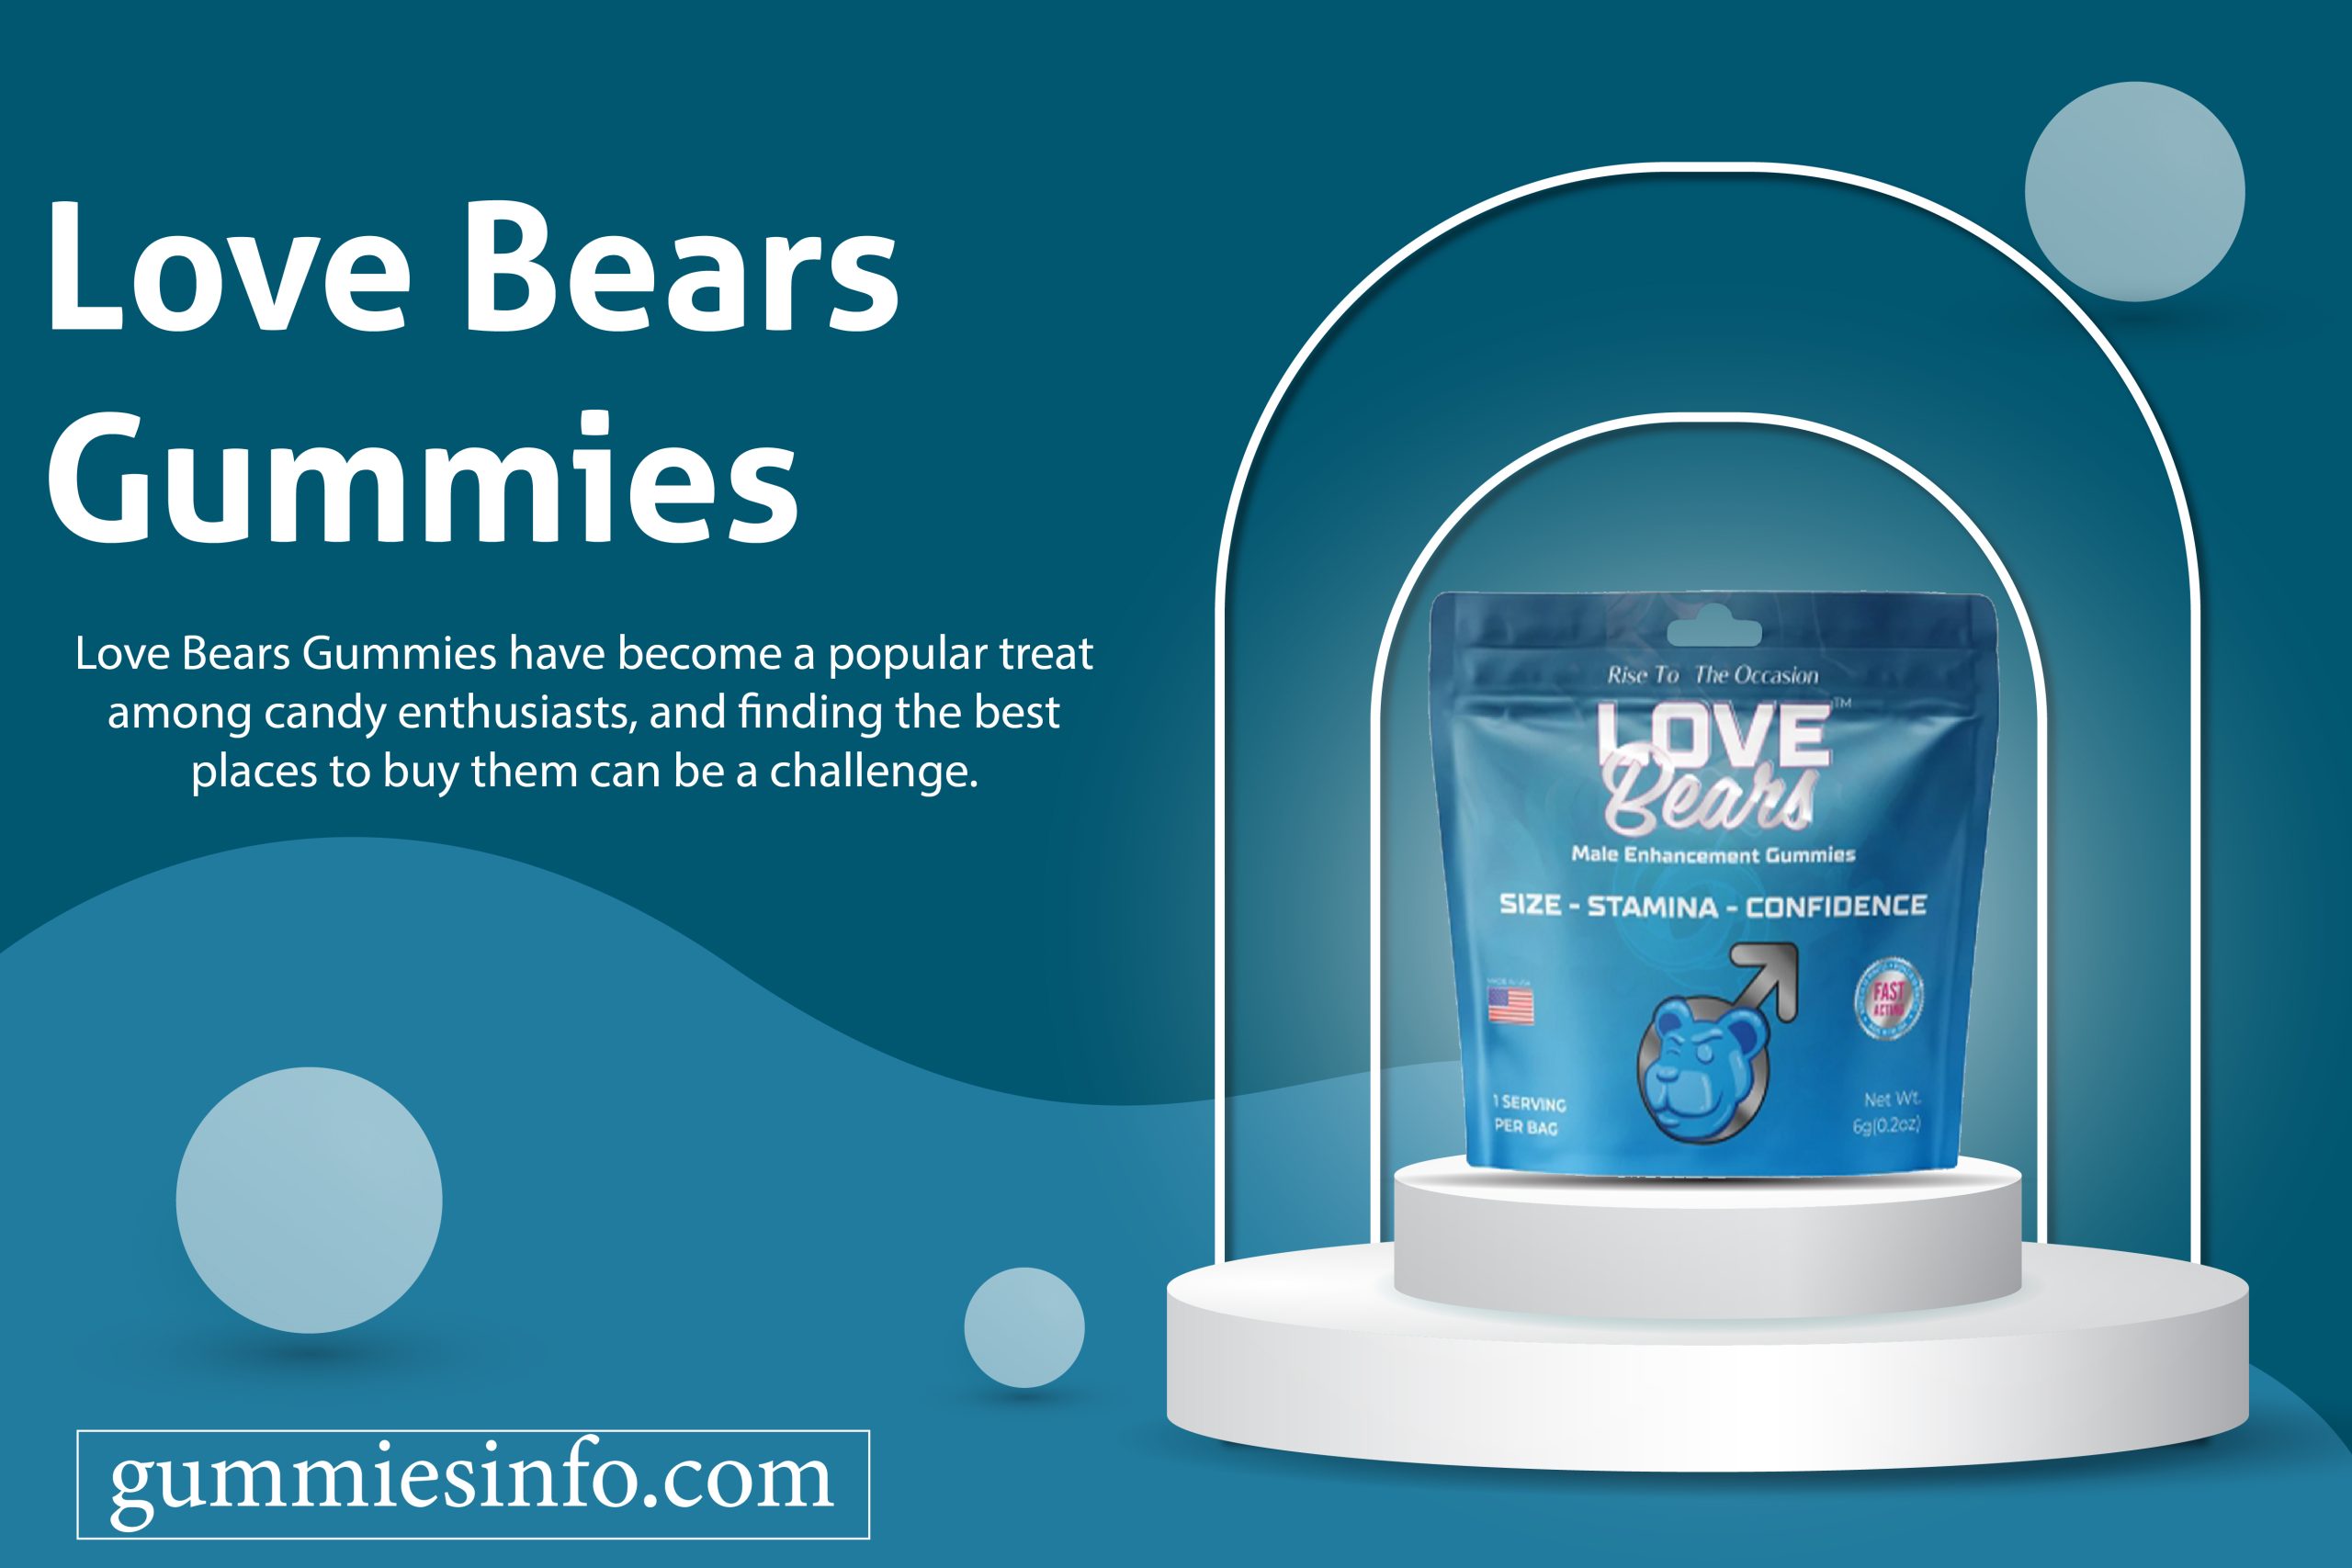 Love Bears Gummies